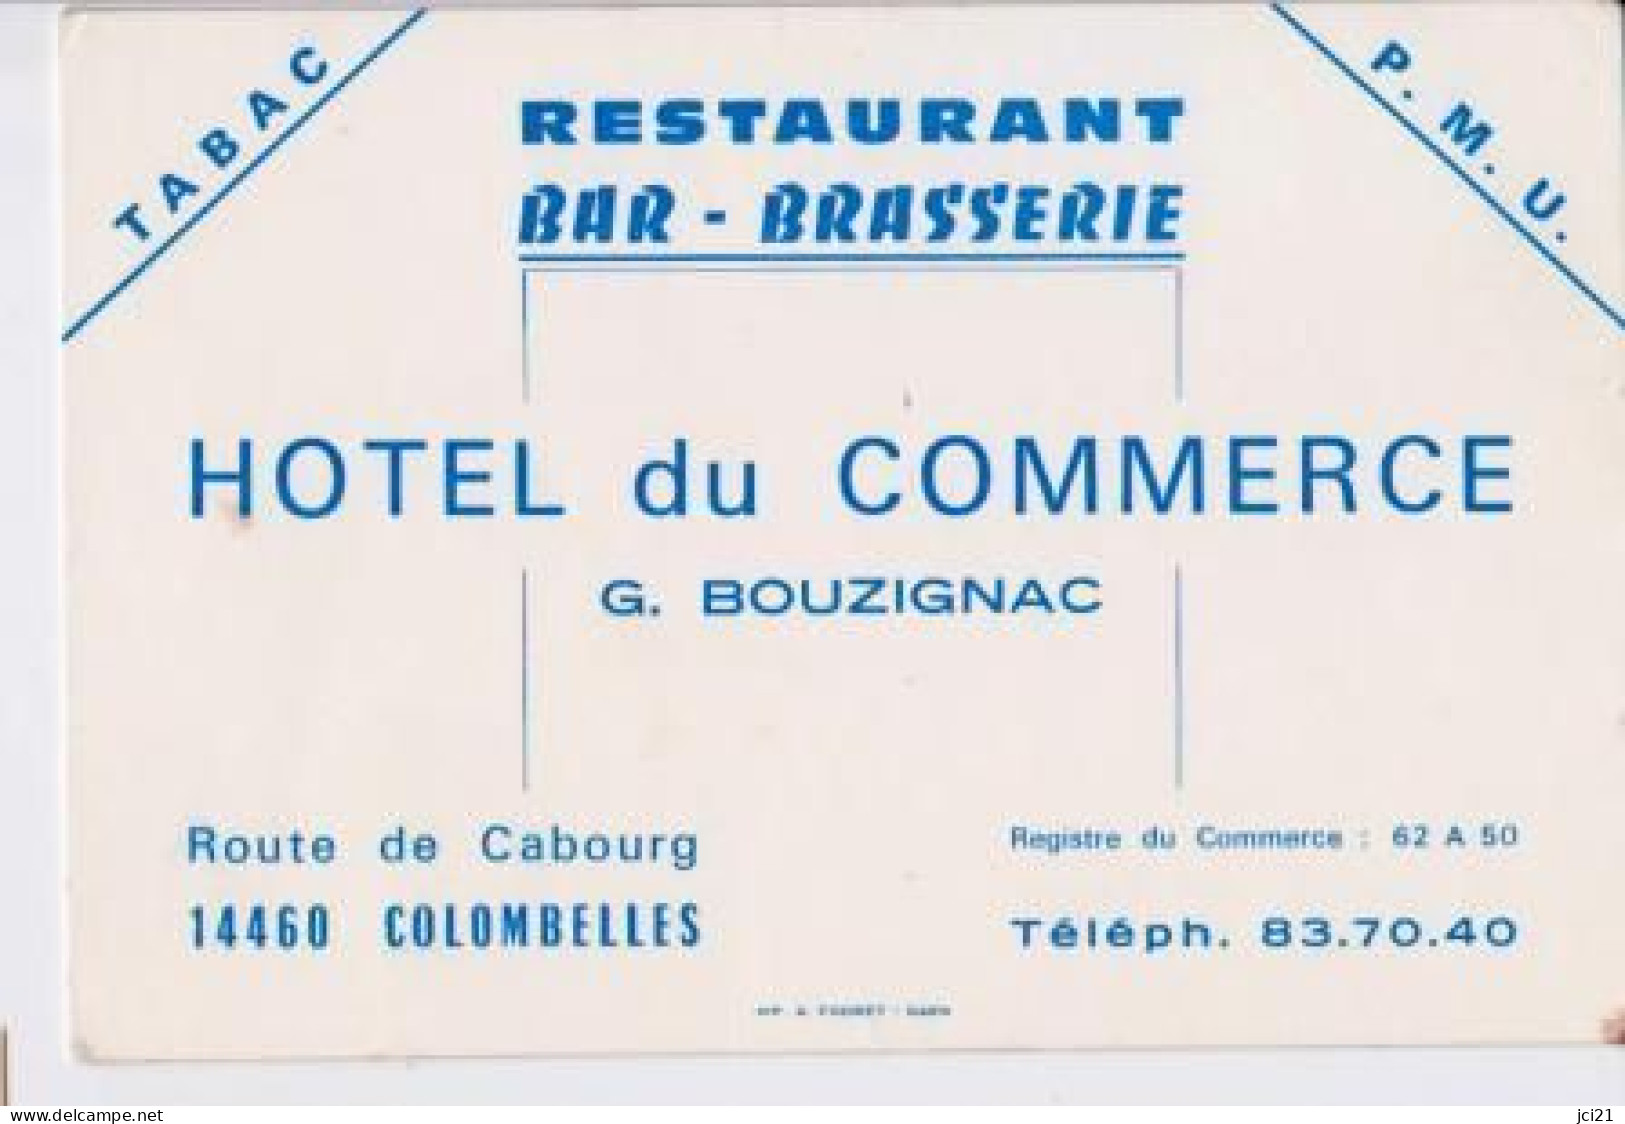 Restaurant Bar Brasserie Hôtel Du Commerce G.BOUZIGNAC 14460 COLOMBELLES _CV99 - Visiting Cards